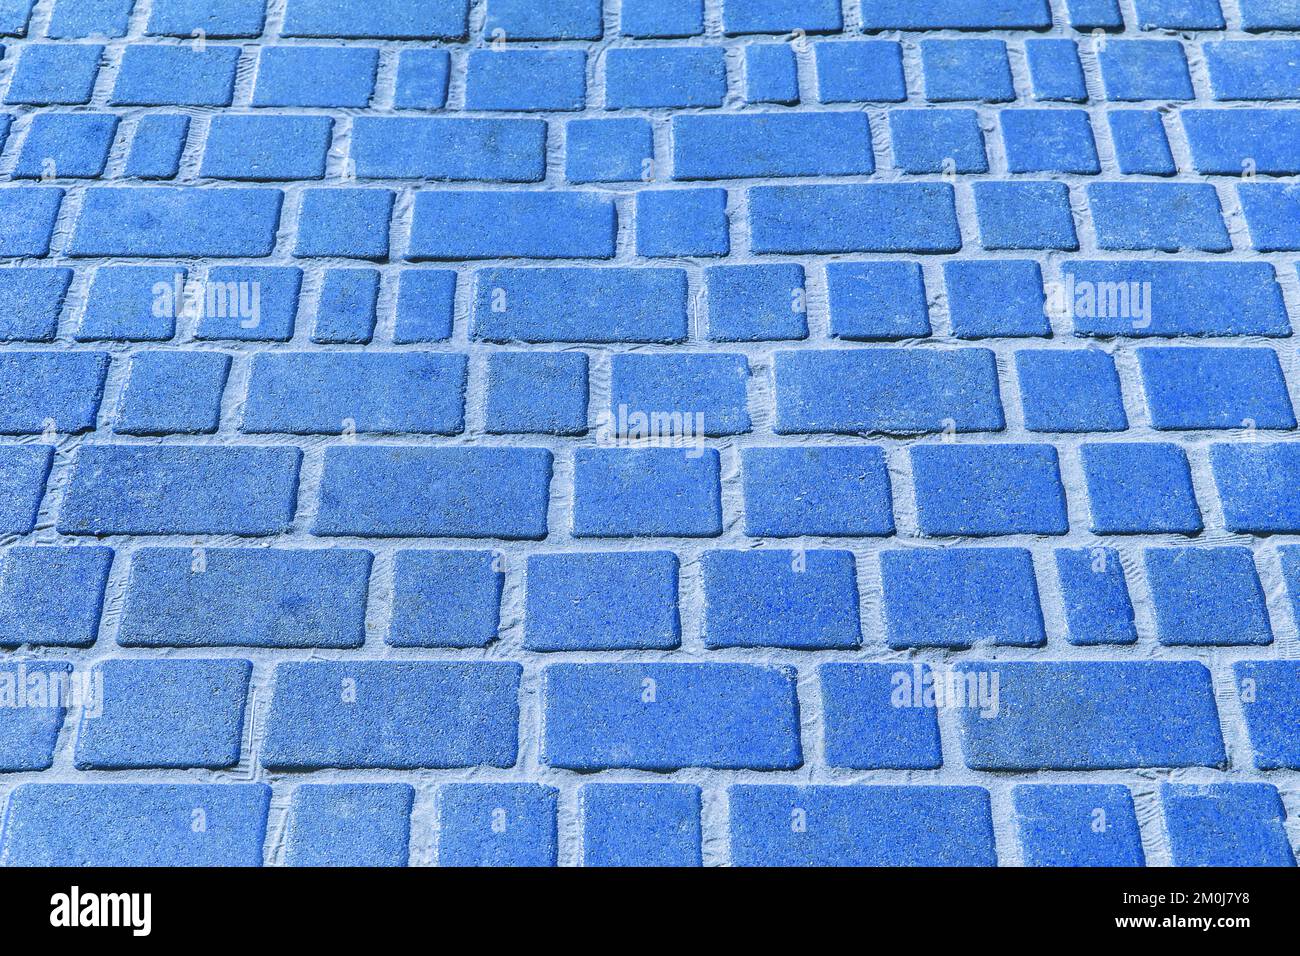 Blue stone paving slabs floor tile urban texture street road background. Stock Photo